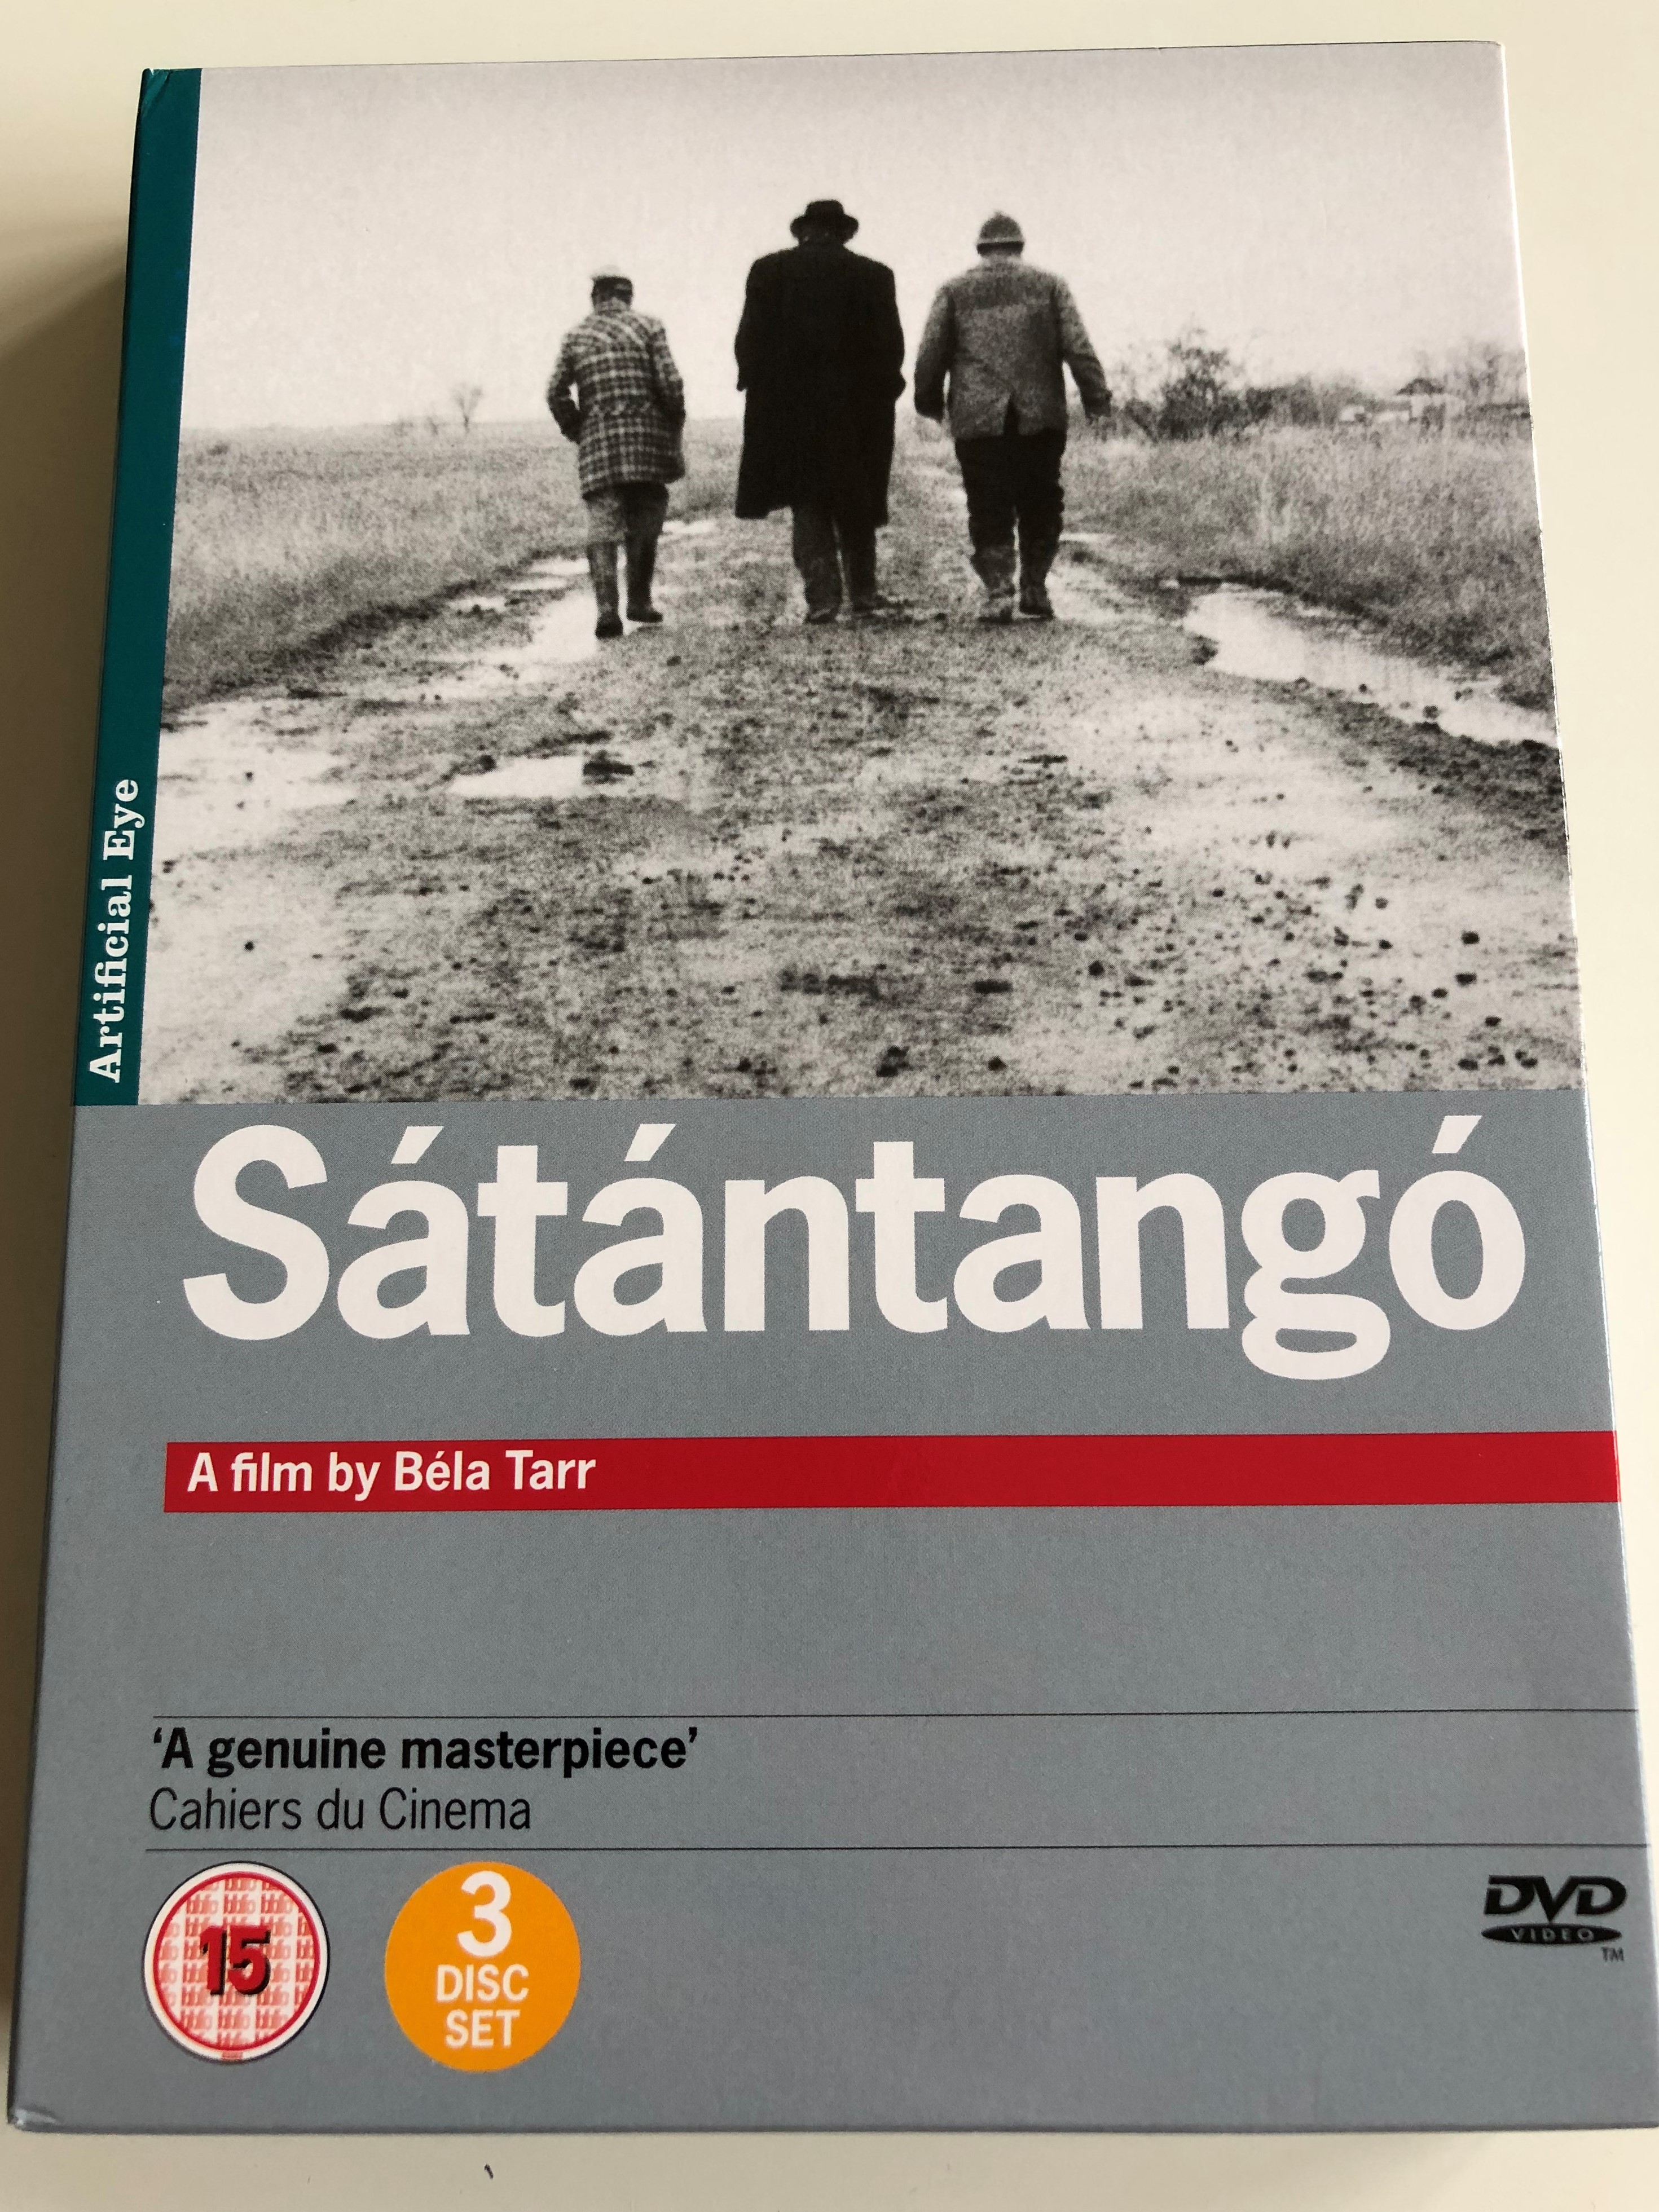 s-t-ntang-3-disc-dvd-set-1994-satan-s-tango-directed-by-b-la-tarr-1-.jpg